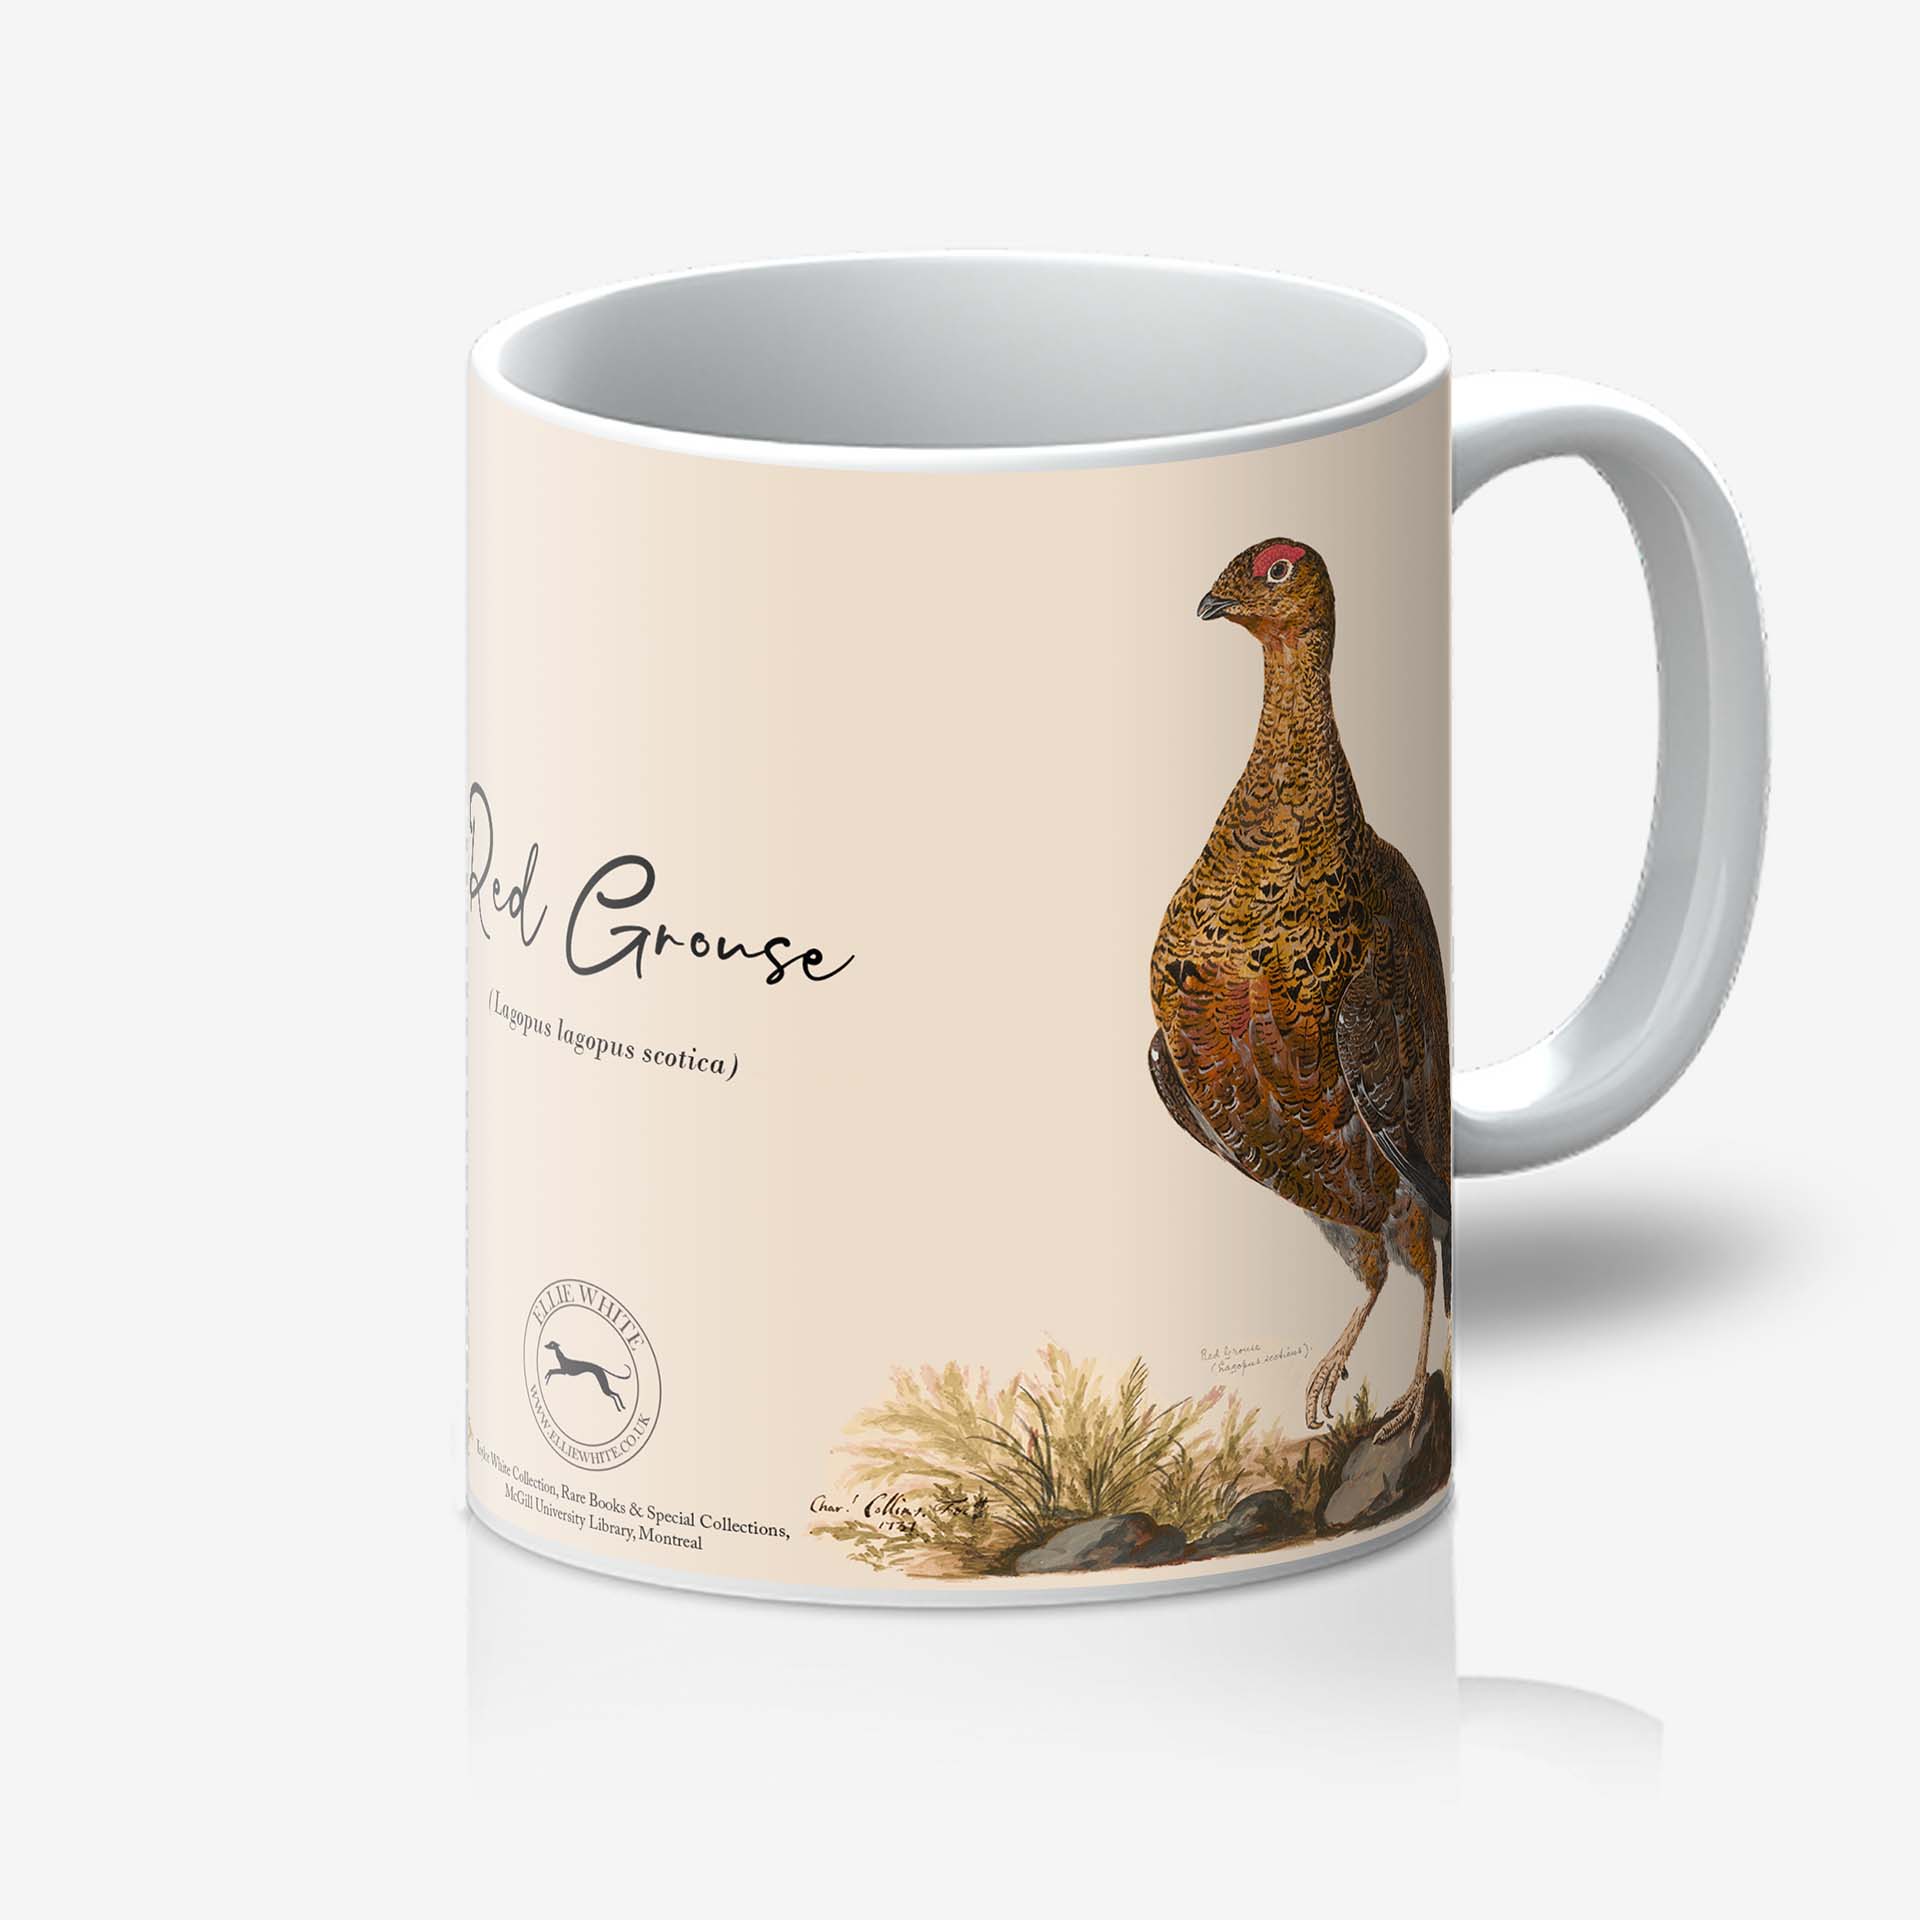 Ceramic Red Grouse Mug